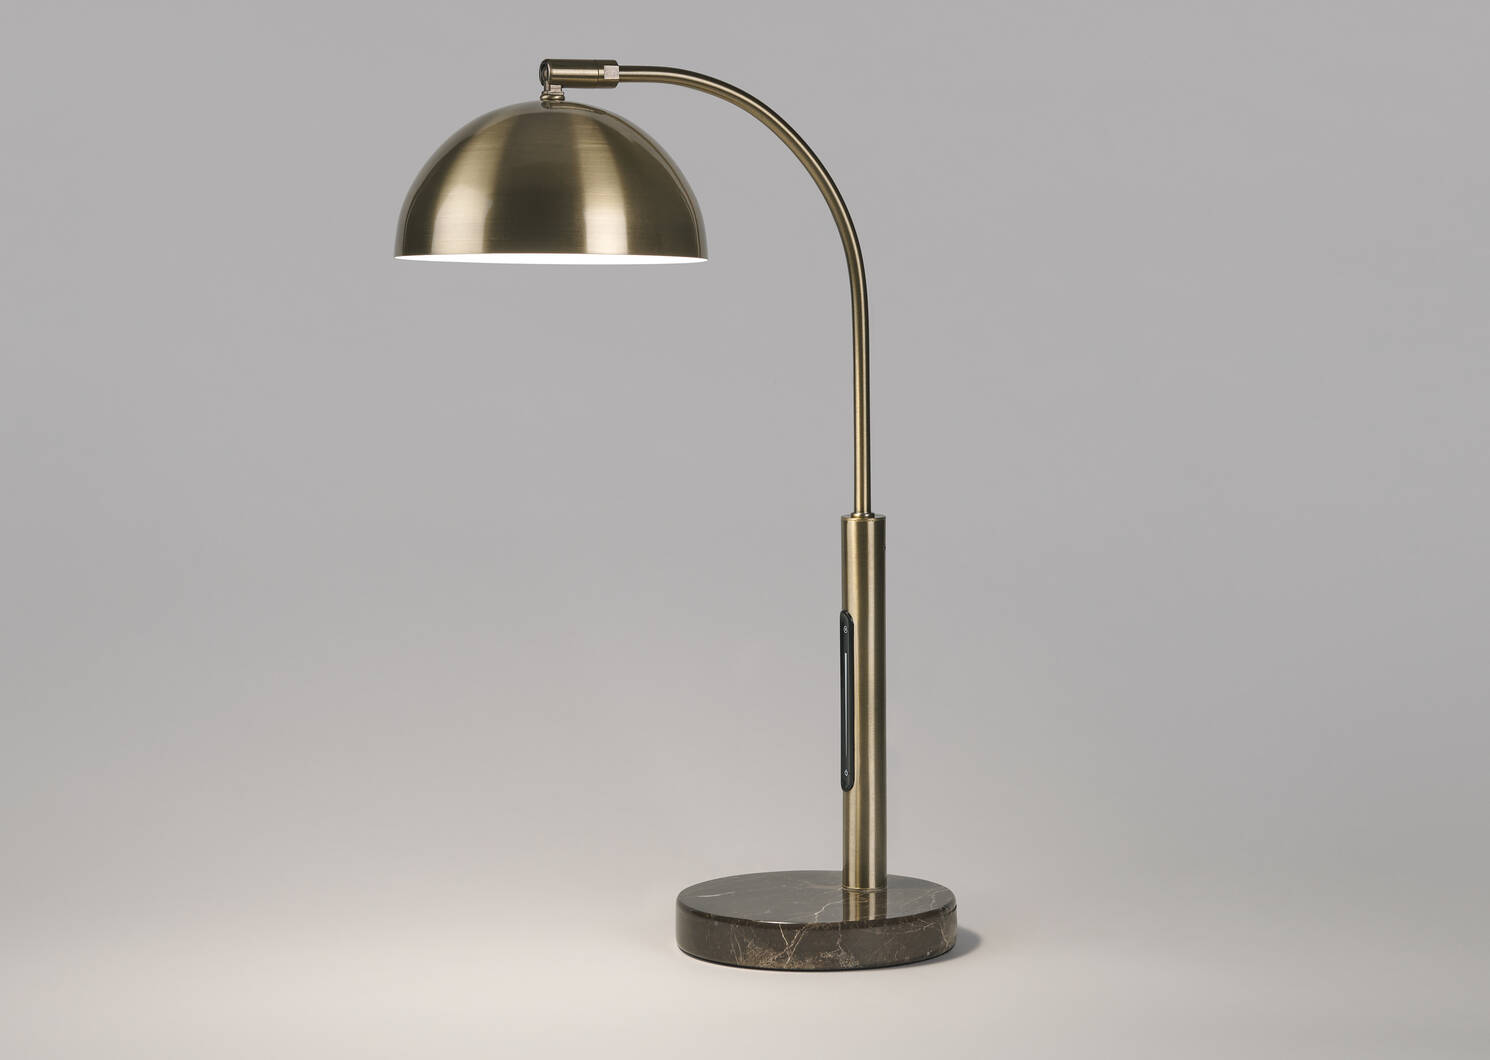 Yeaton LED Table Lamp